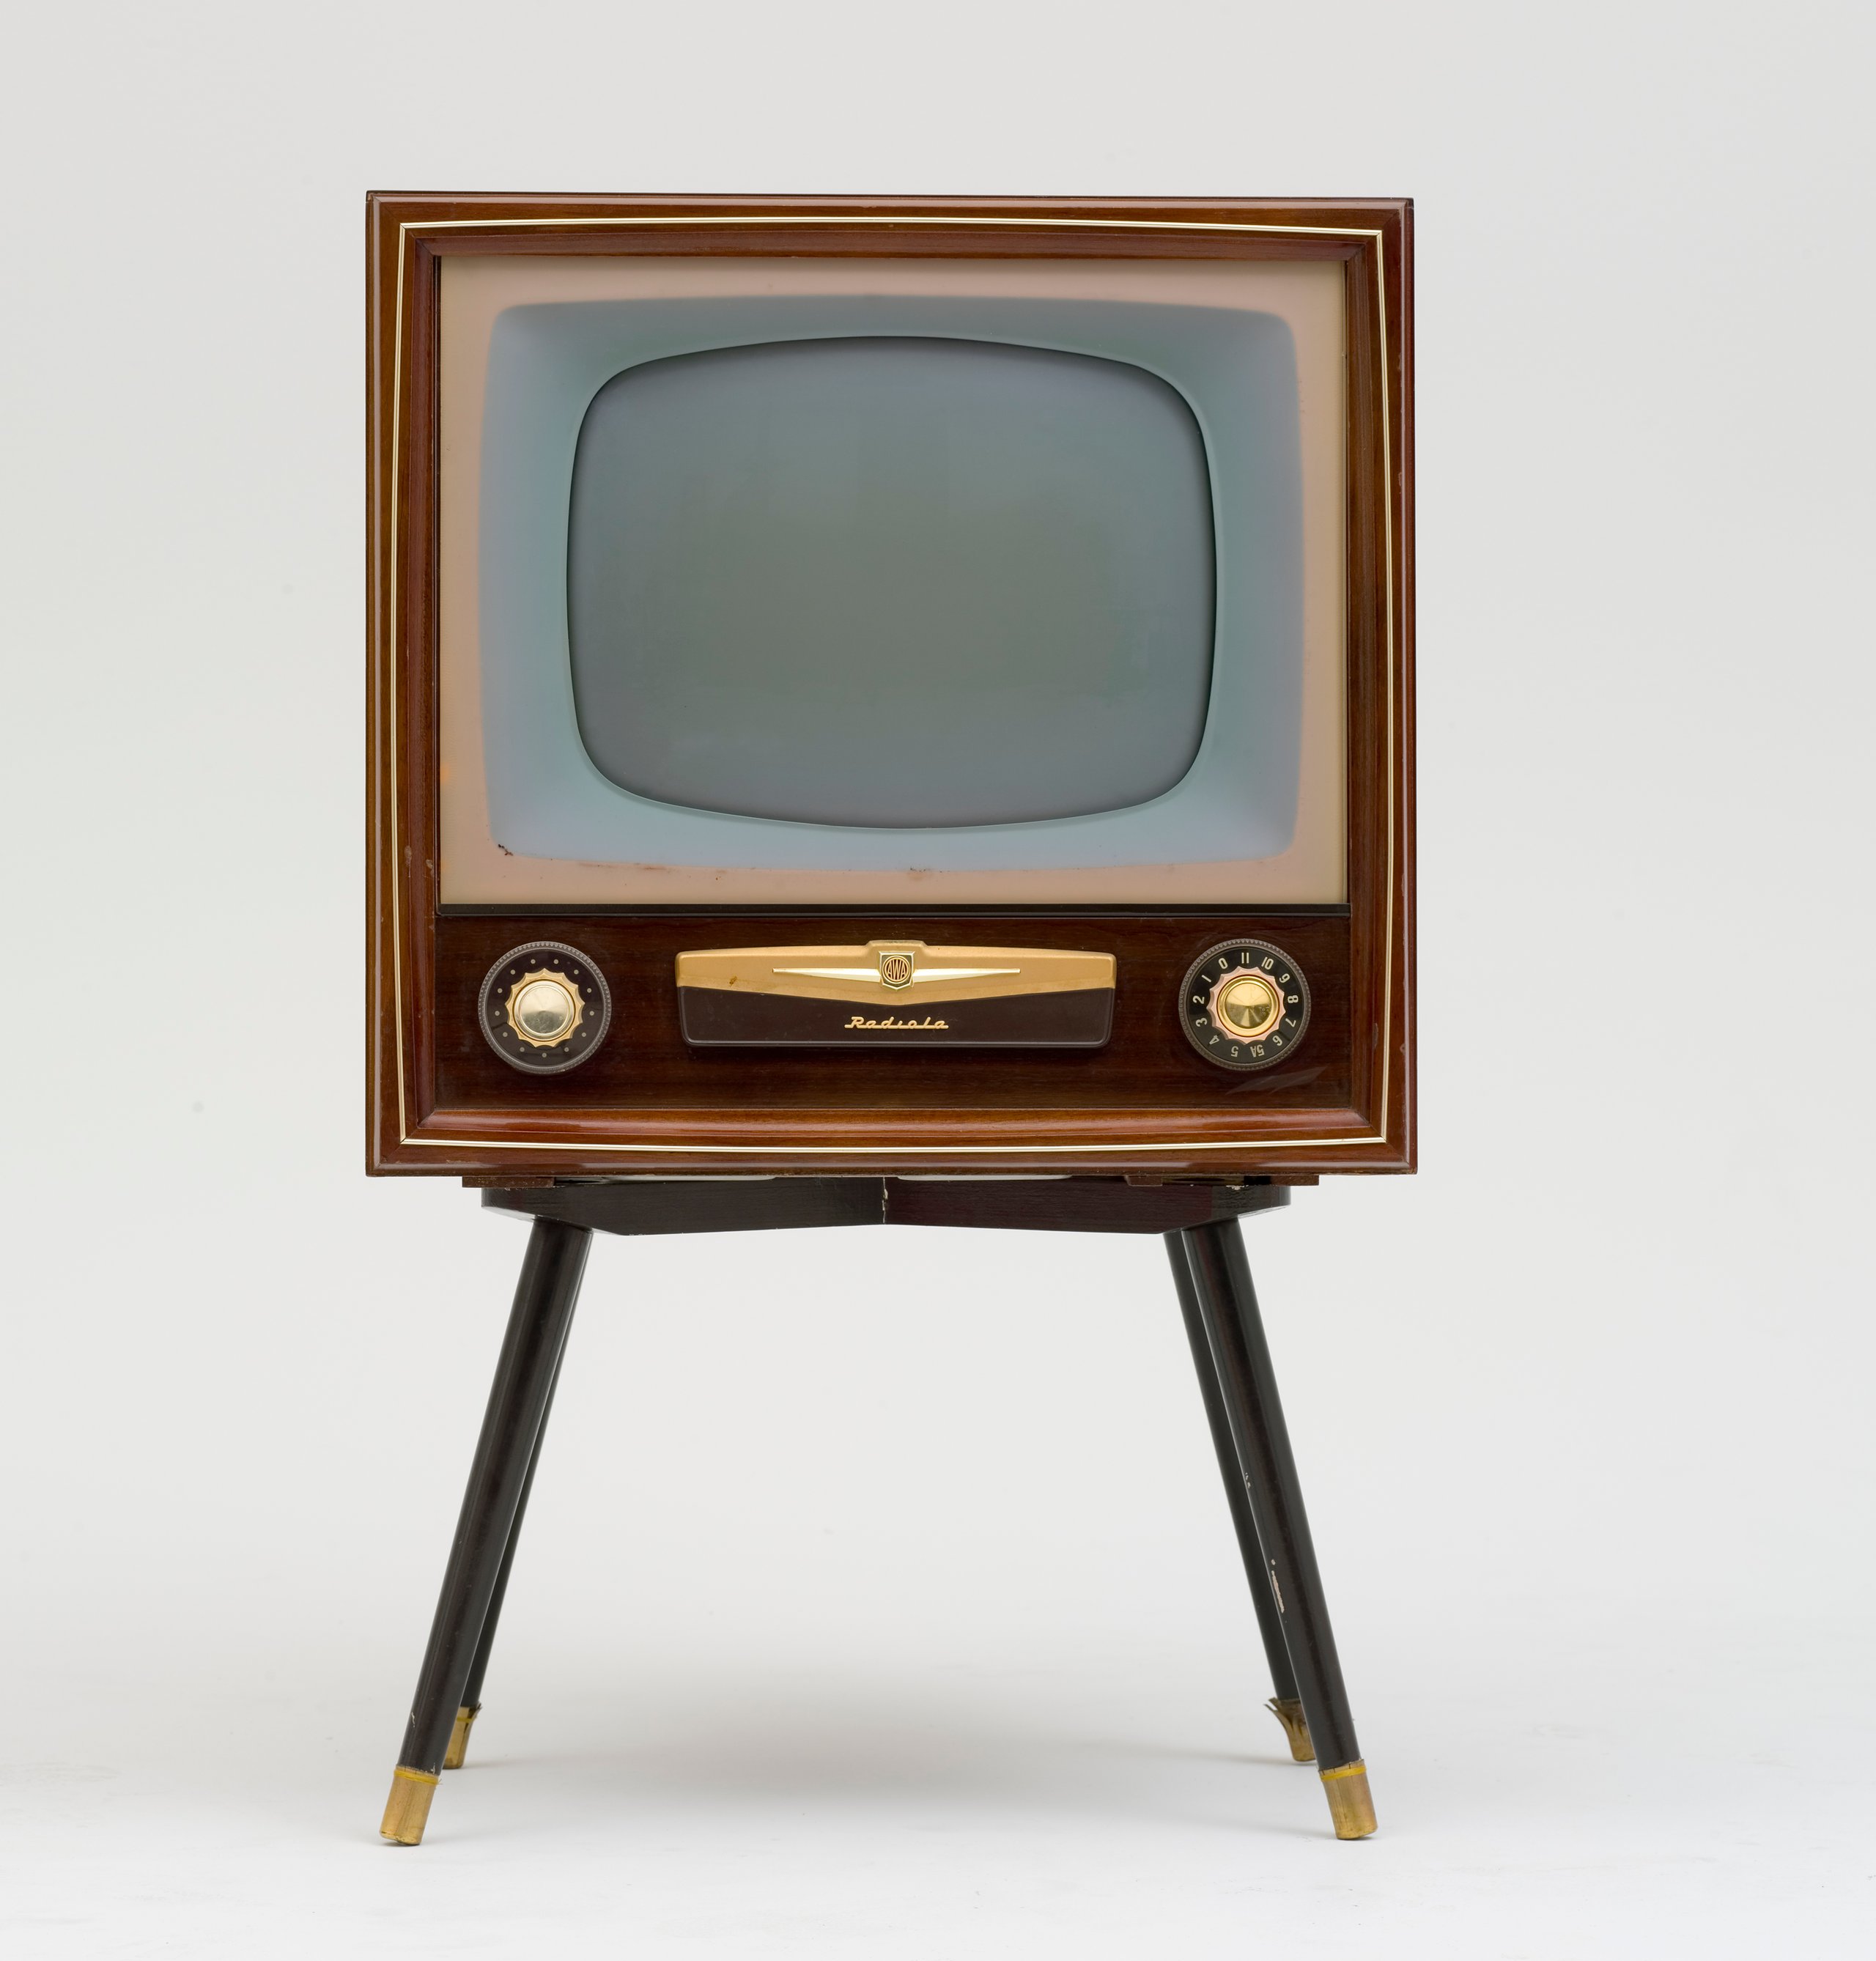 AWA television receiver